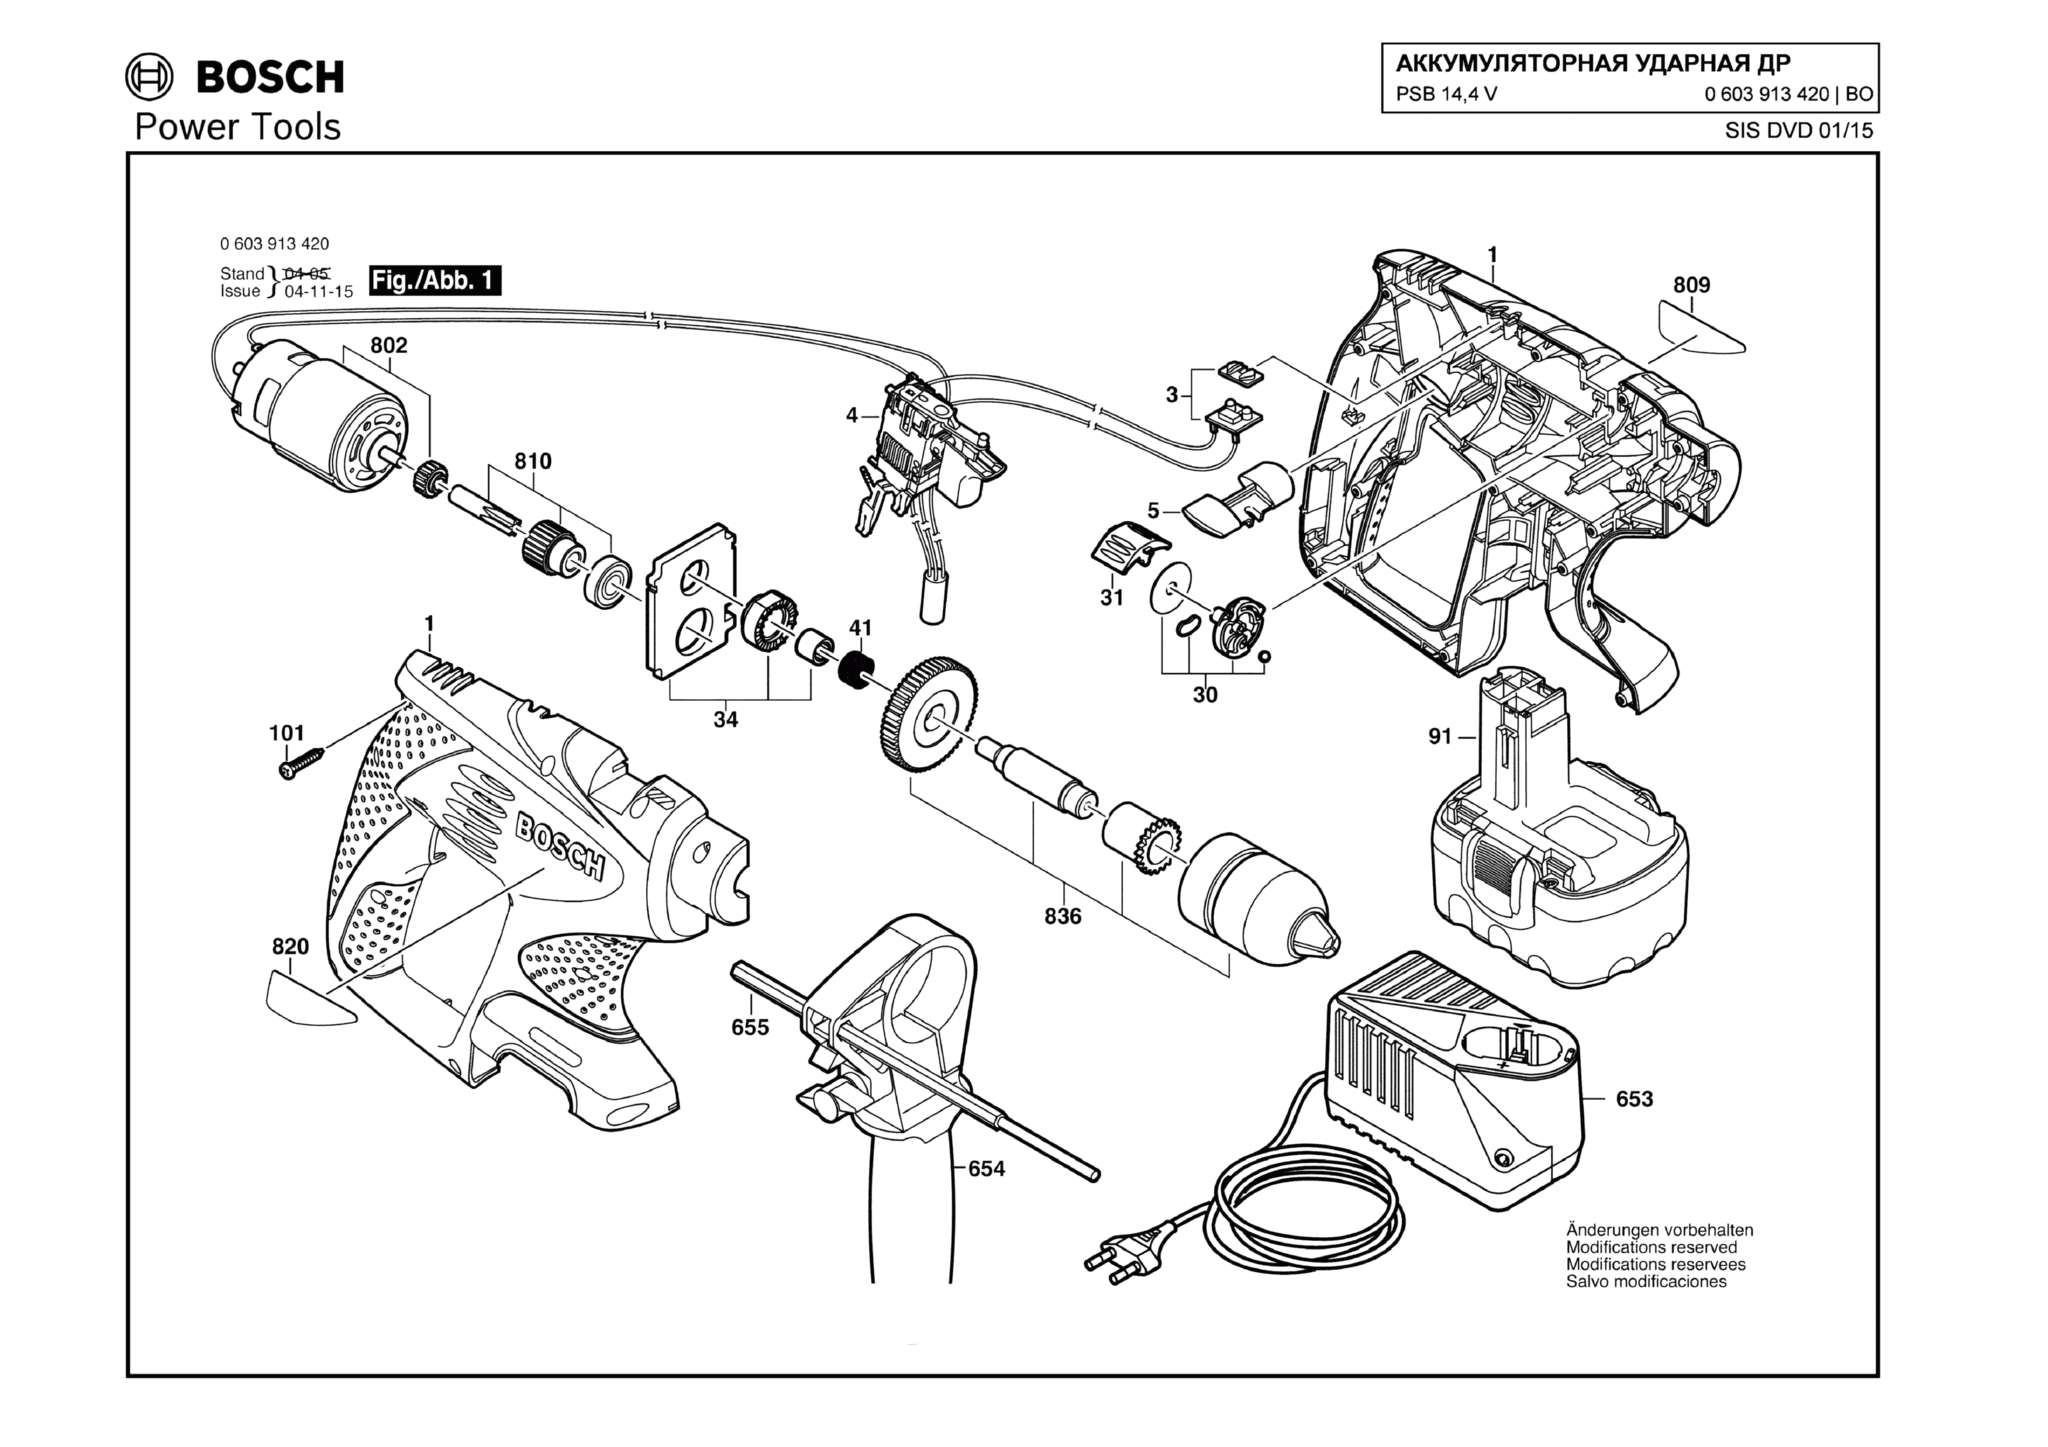 Запчасти, схема и деталировка Bosch PSB 14,4 V (ТИП 0603913420)